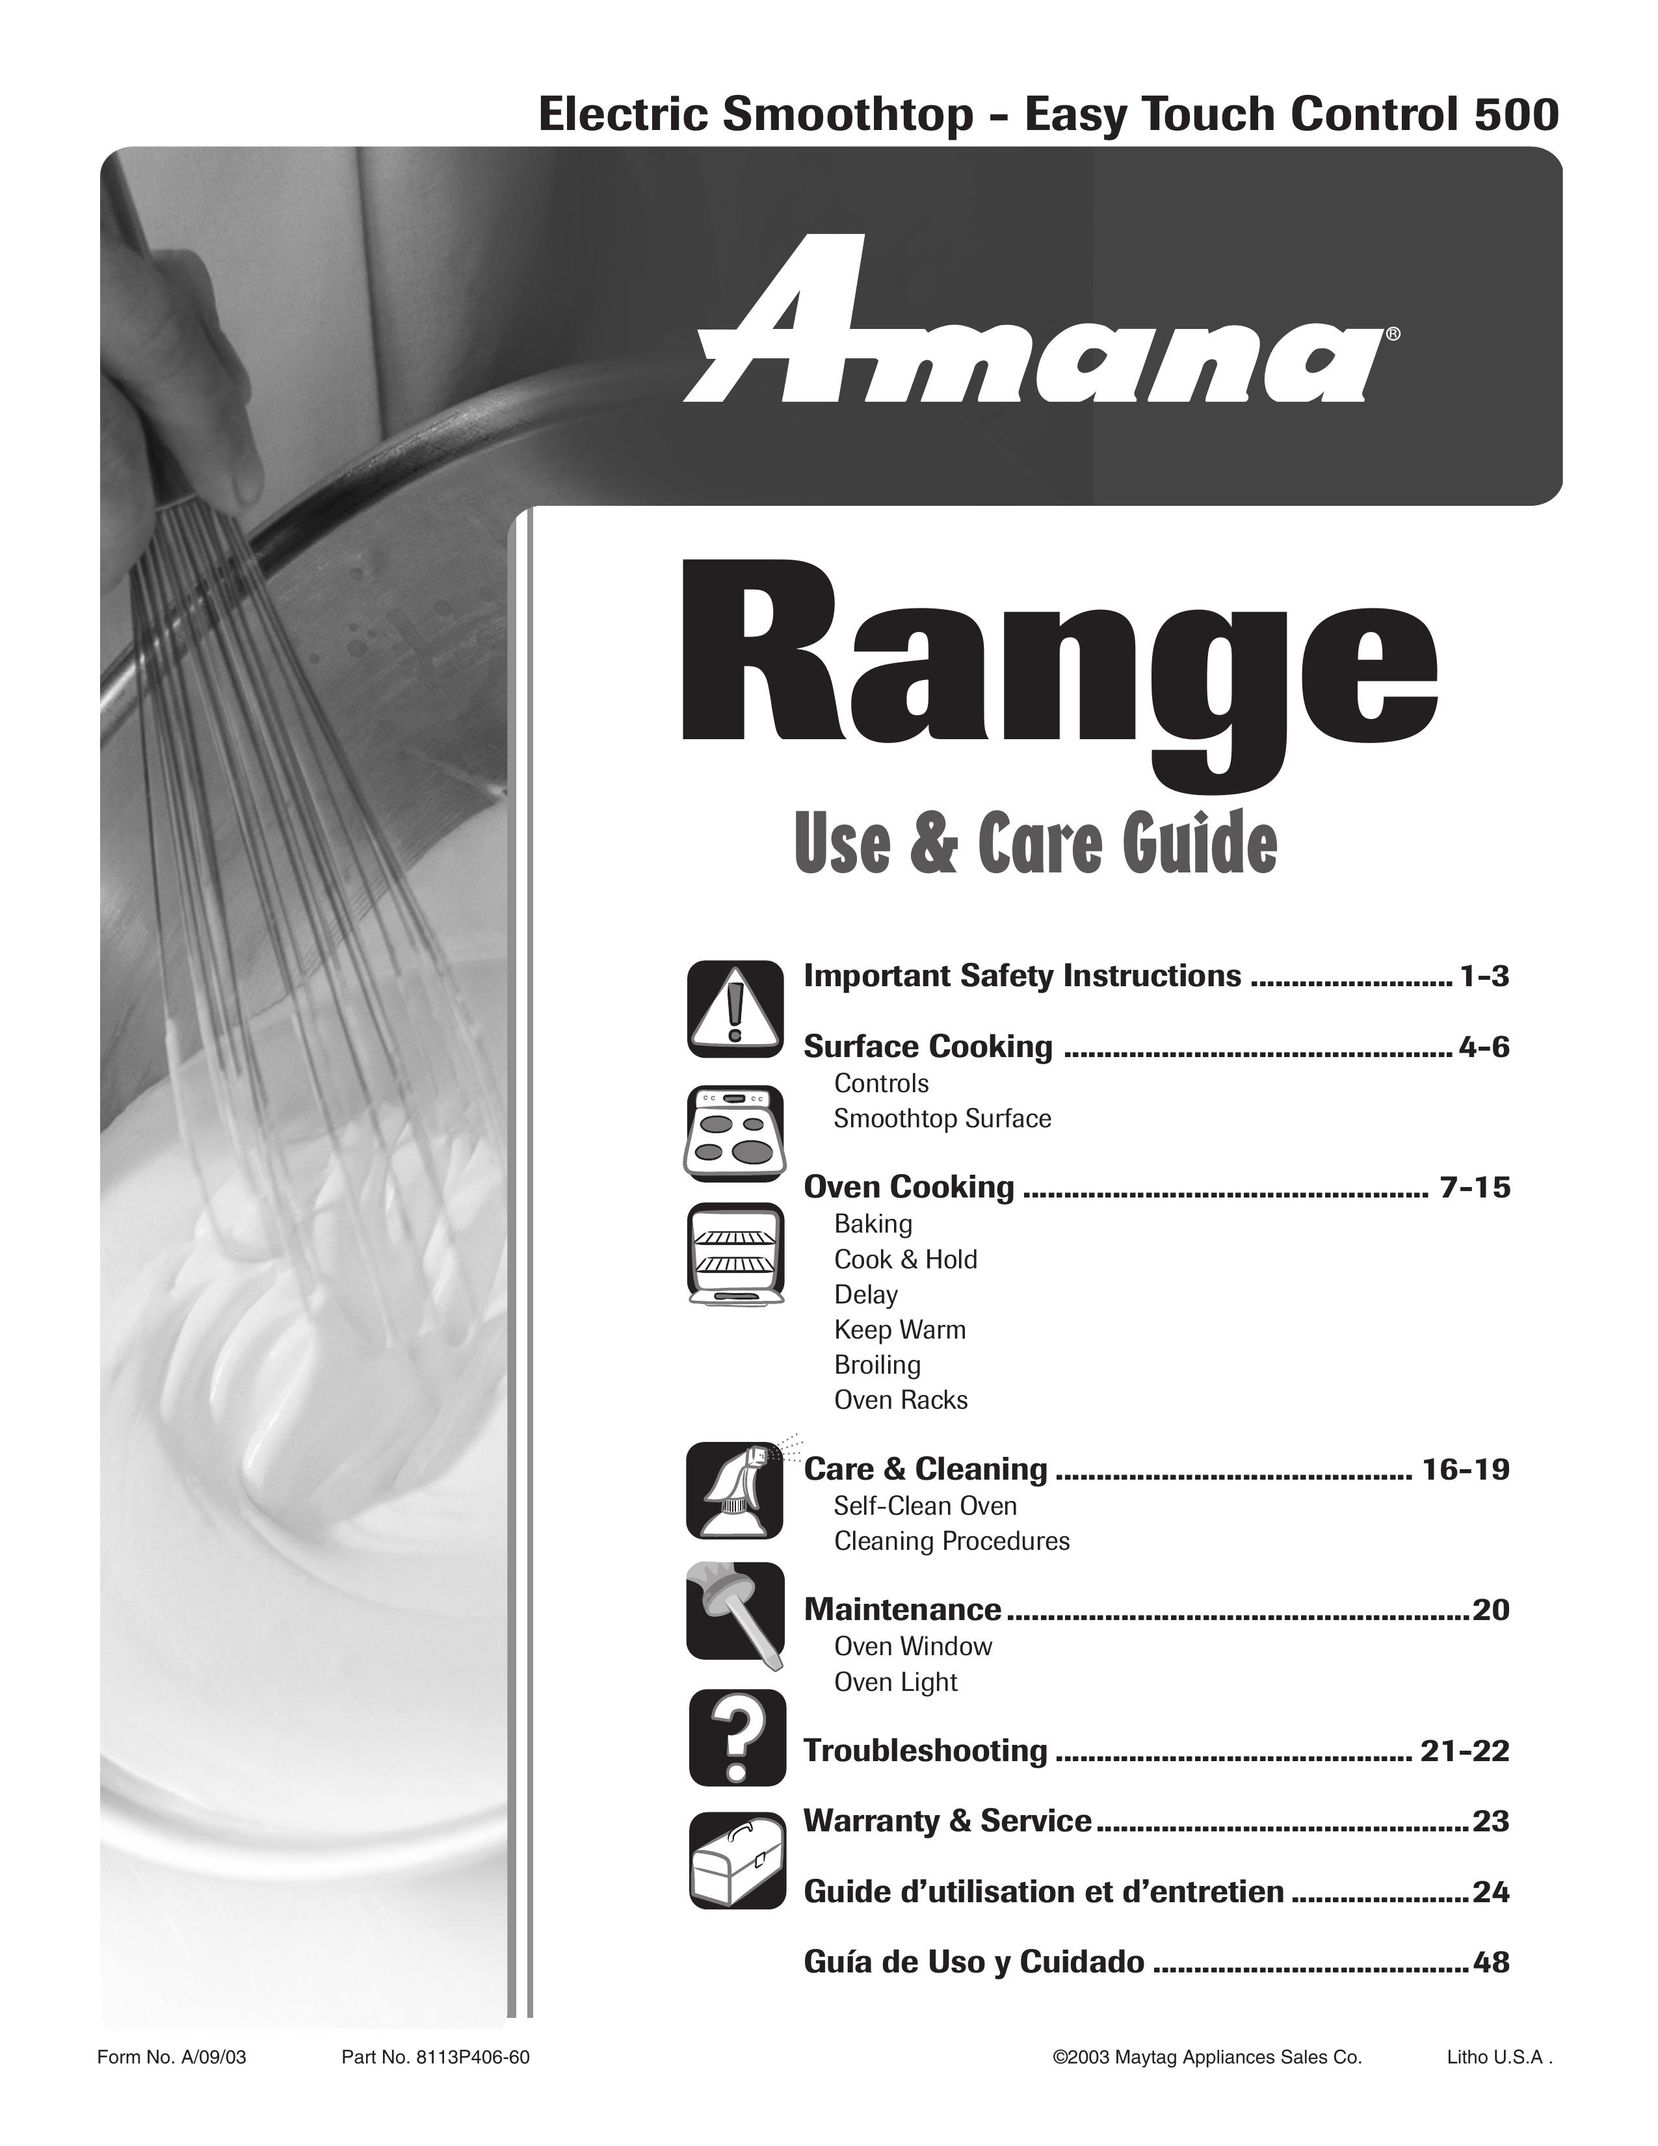 Amana 500 Range User Manual